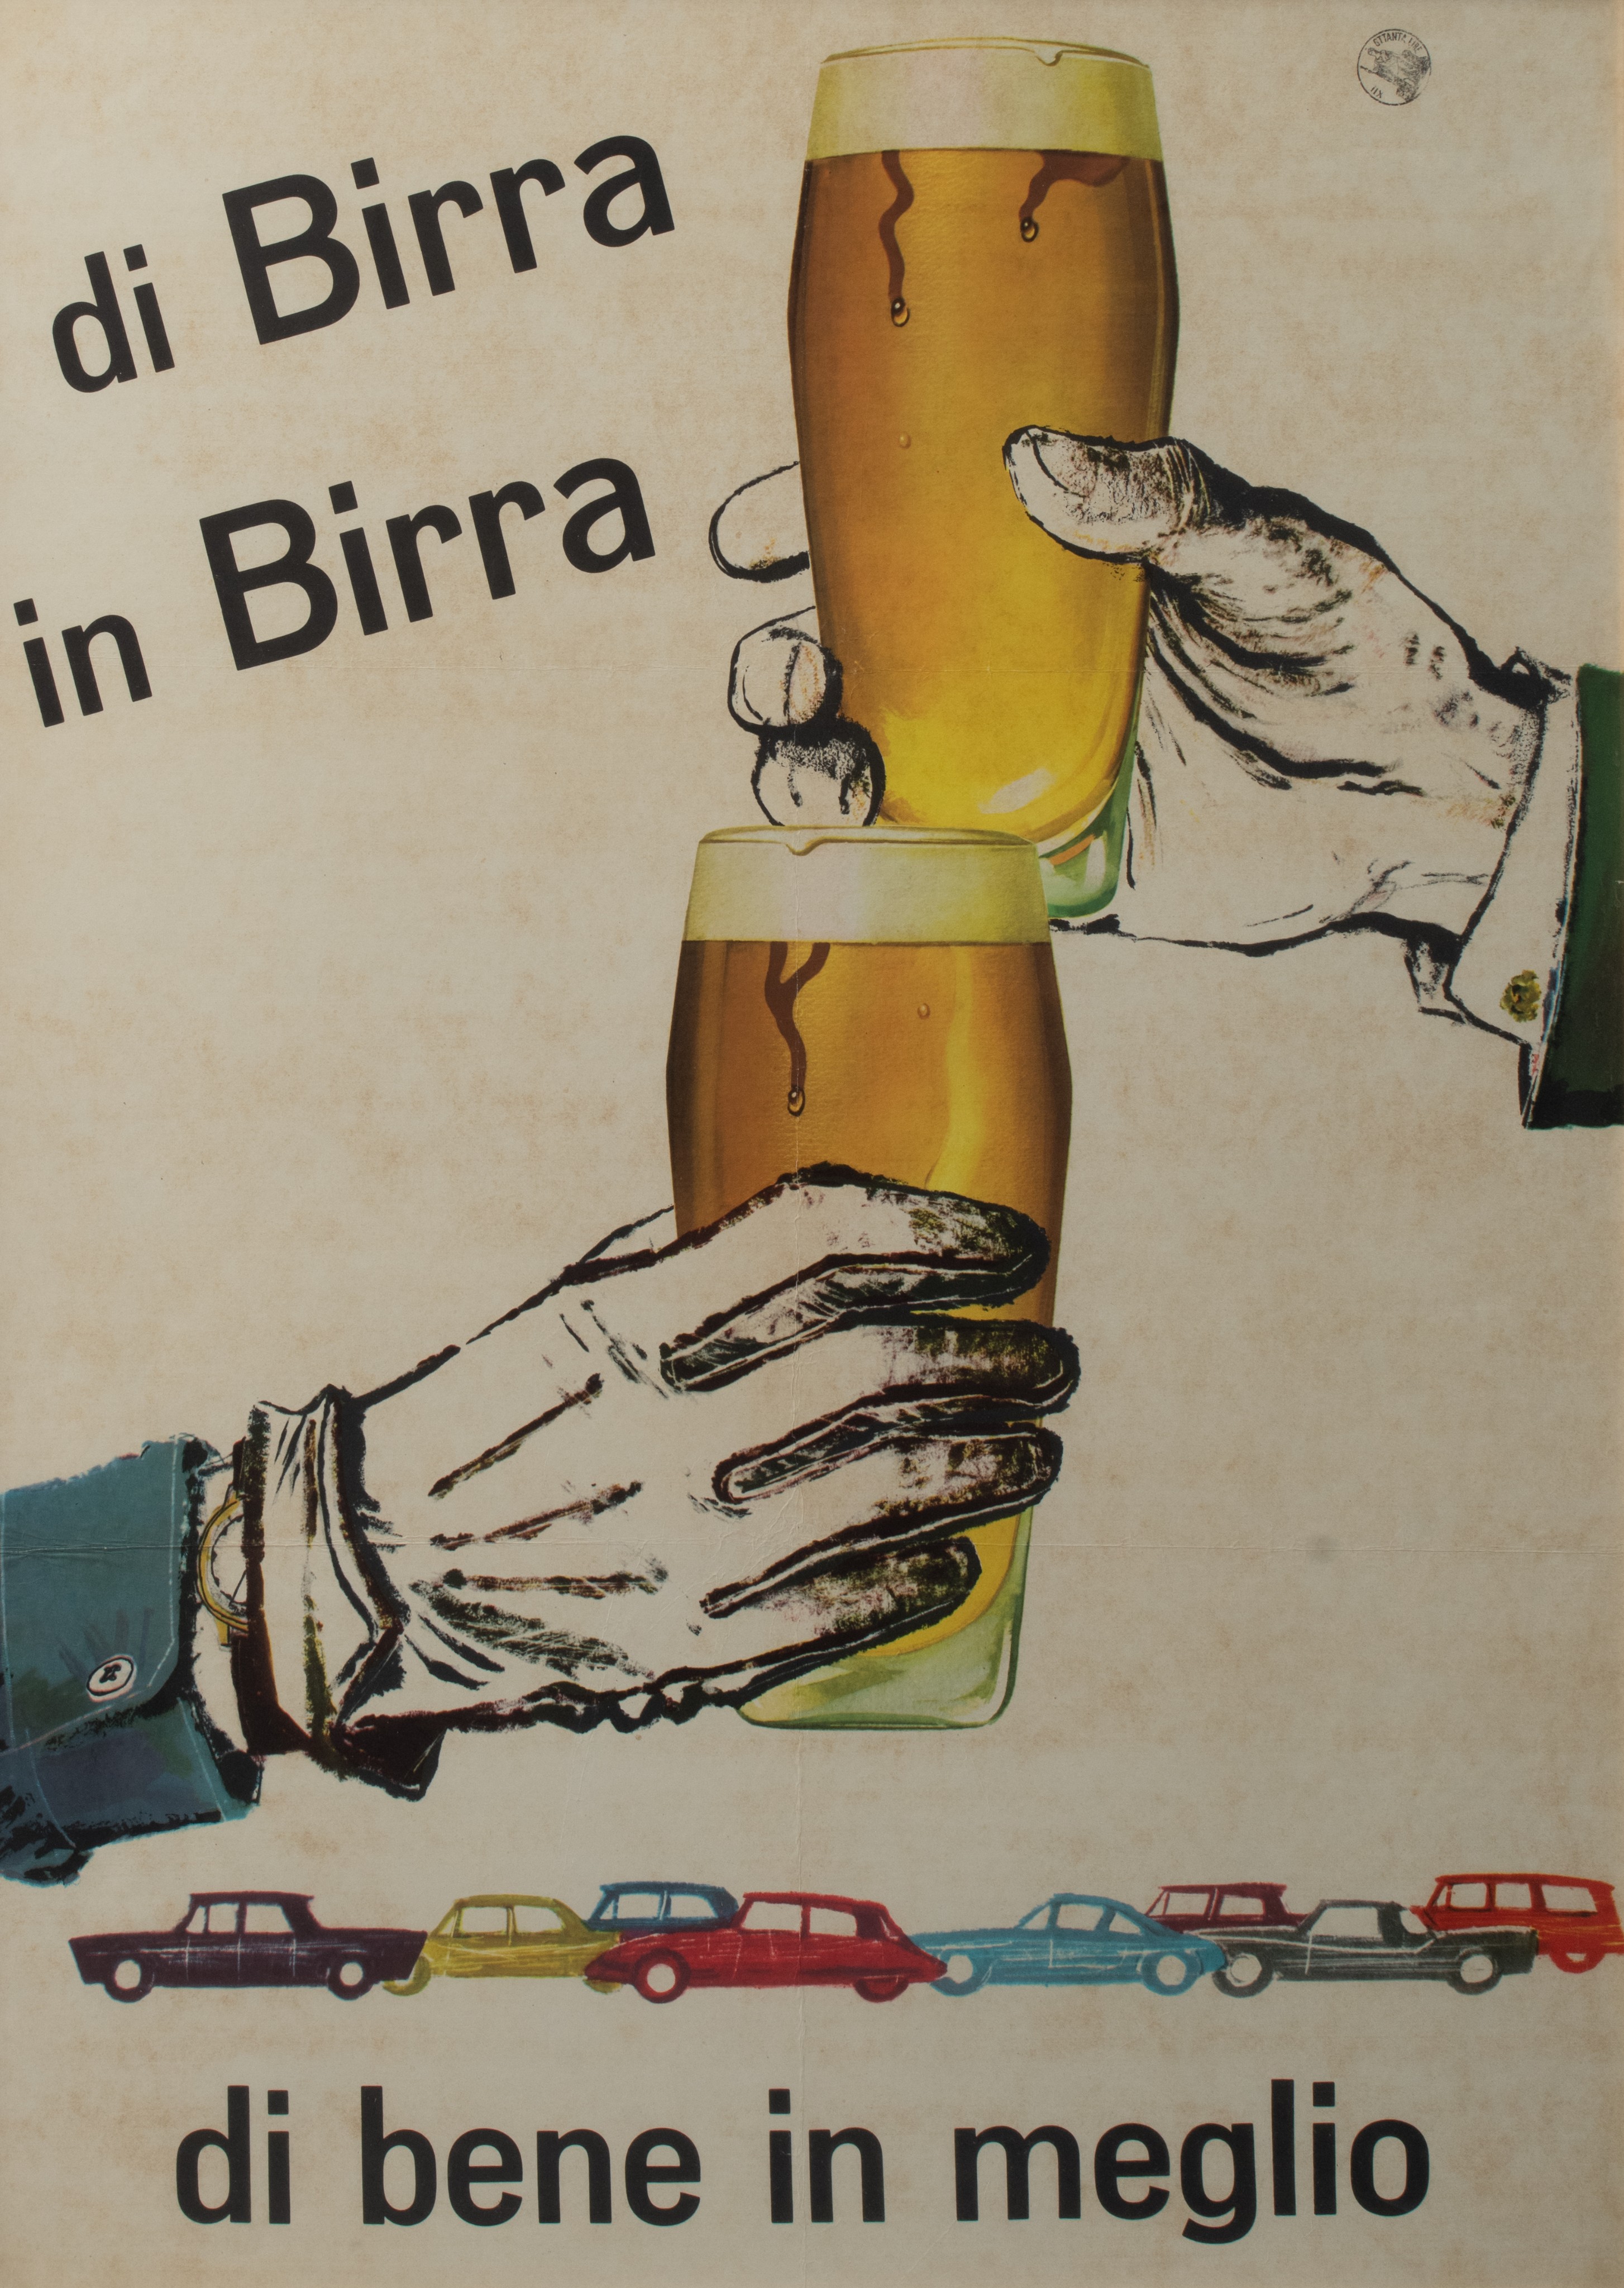 A vintage poster of 'Di Birra In Birra', the '50s, 63 x 93 cm